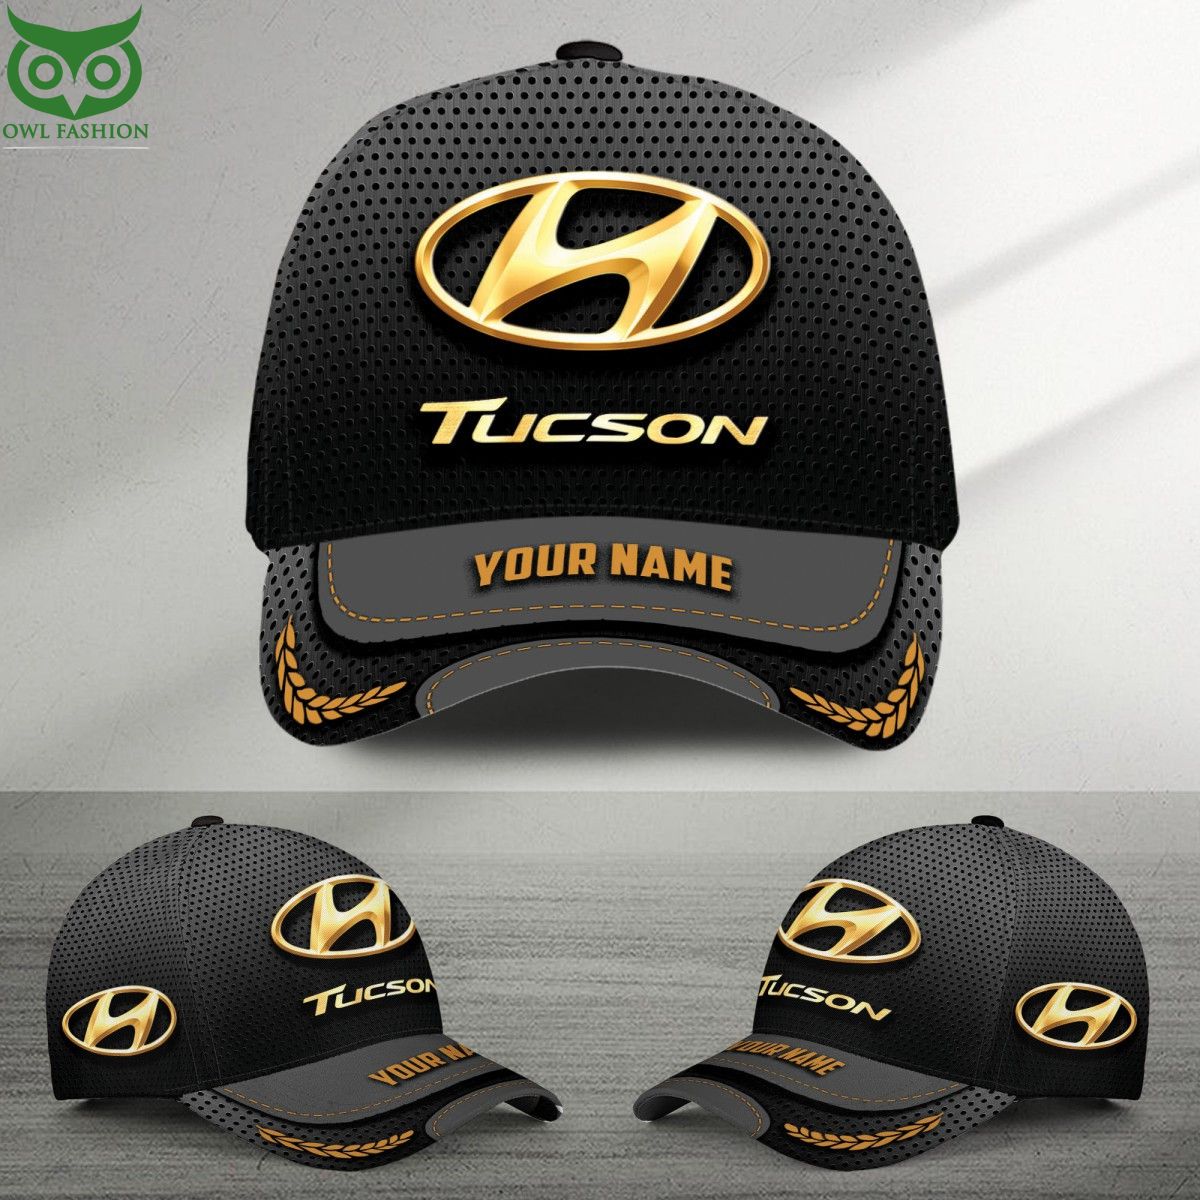 hyundai tucson luxury logo brand personalized classic cap 1 bJ6ZK.jpg